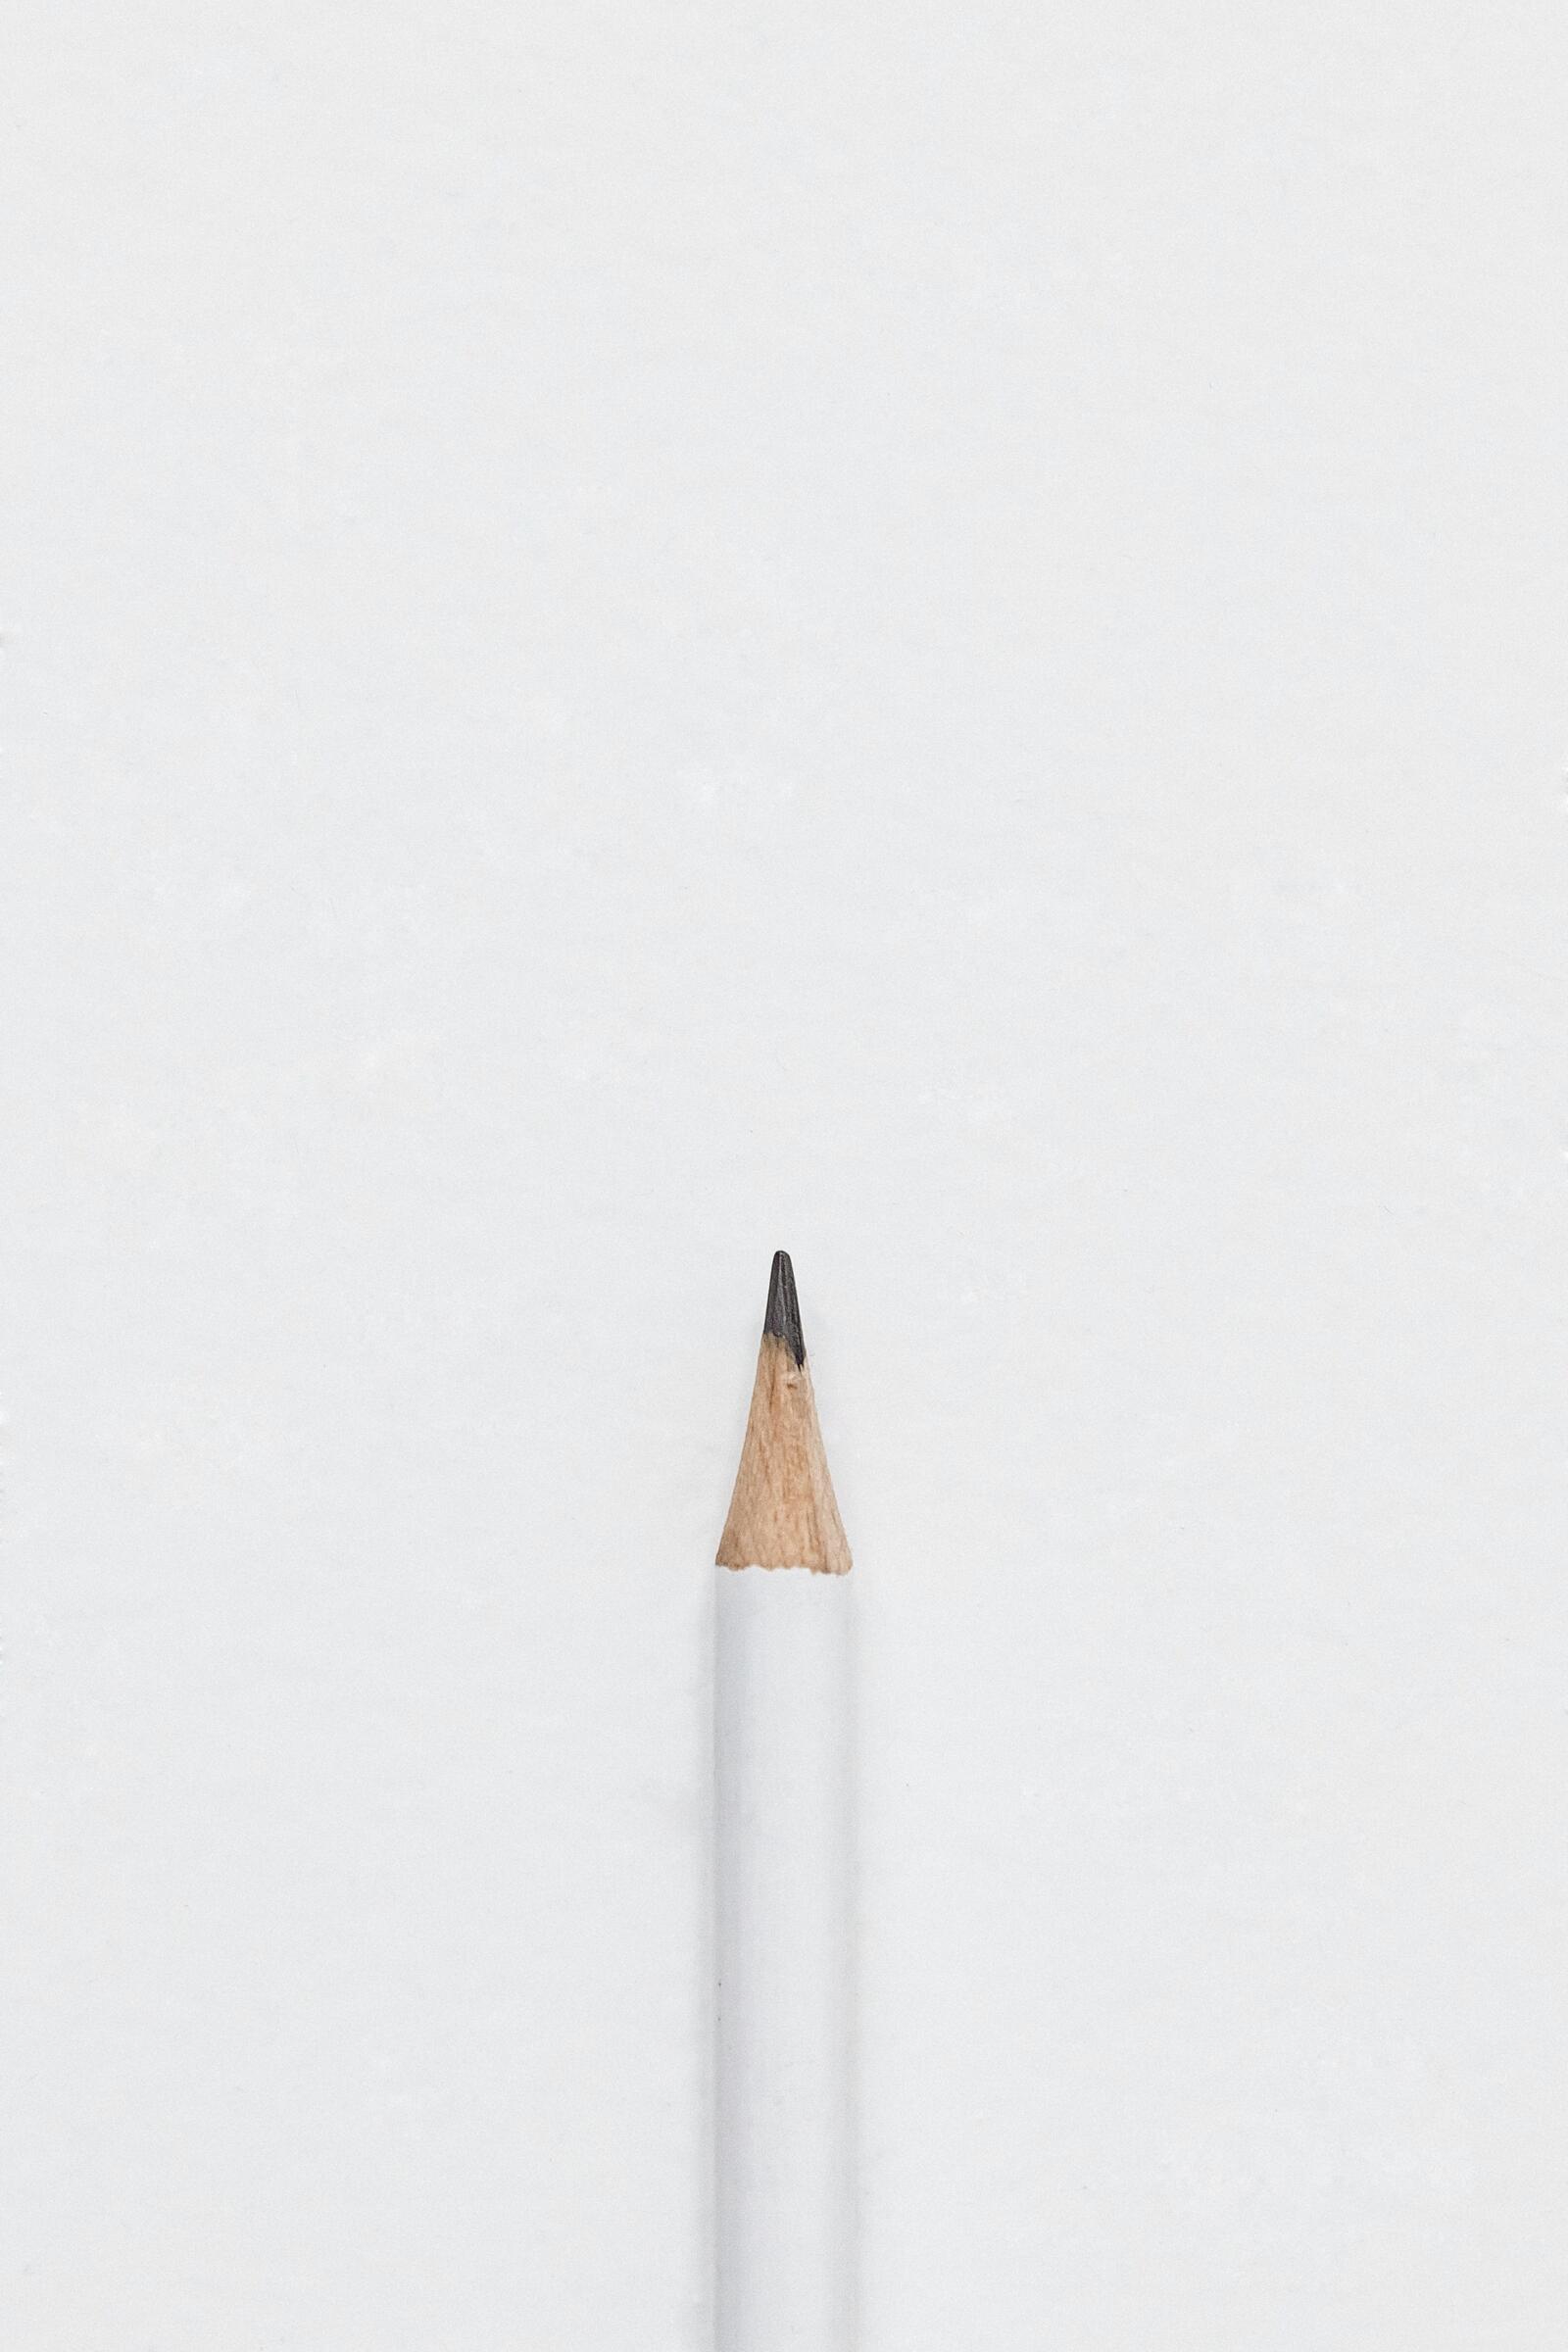 карандаш искусство минимализм